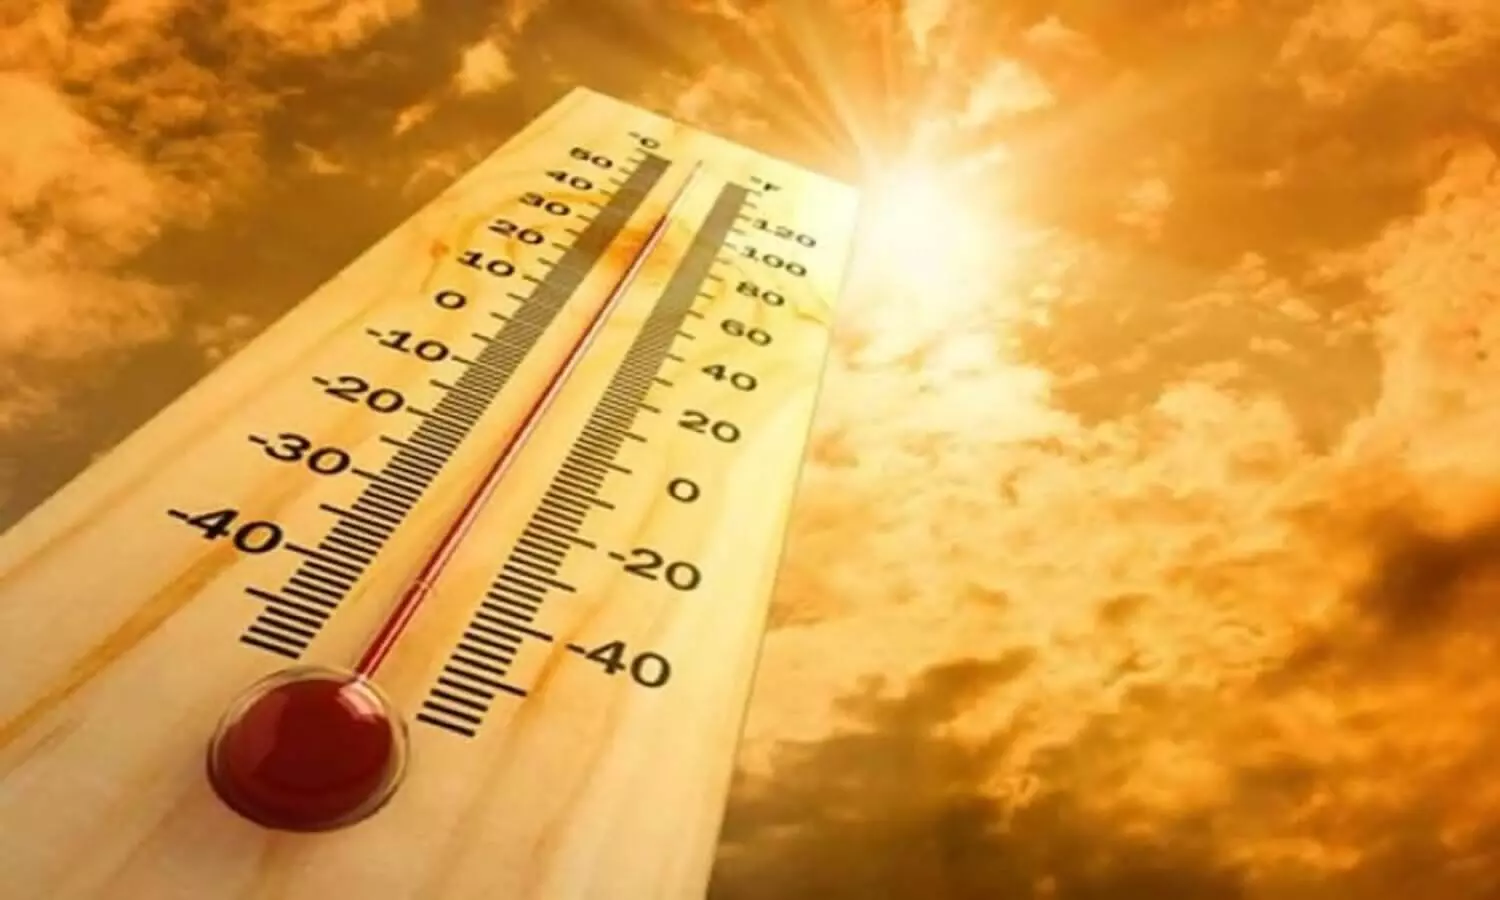 heat wave in up and delhi maximum temperature increase today 9 april 2022 hot delhi up weather forecast